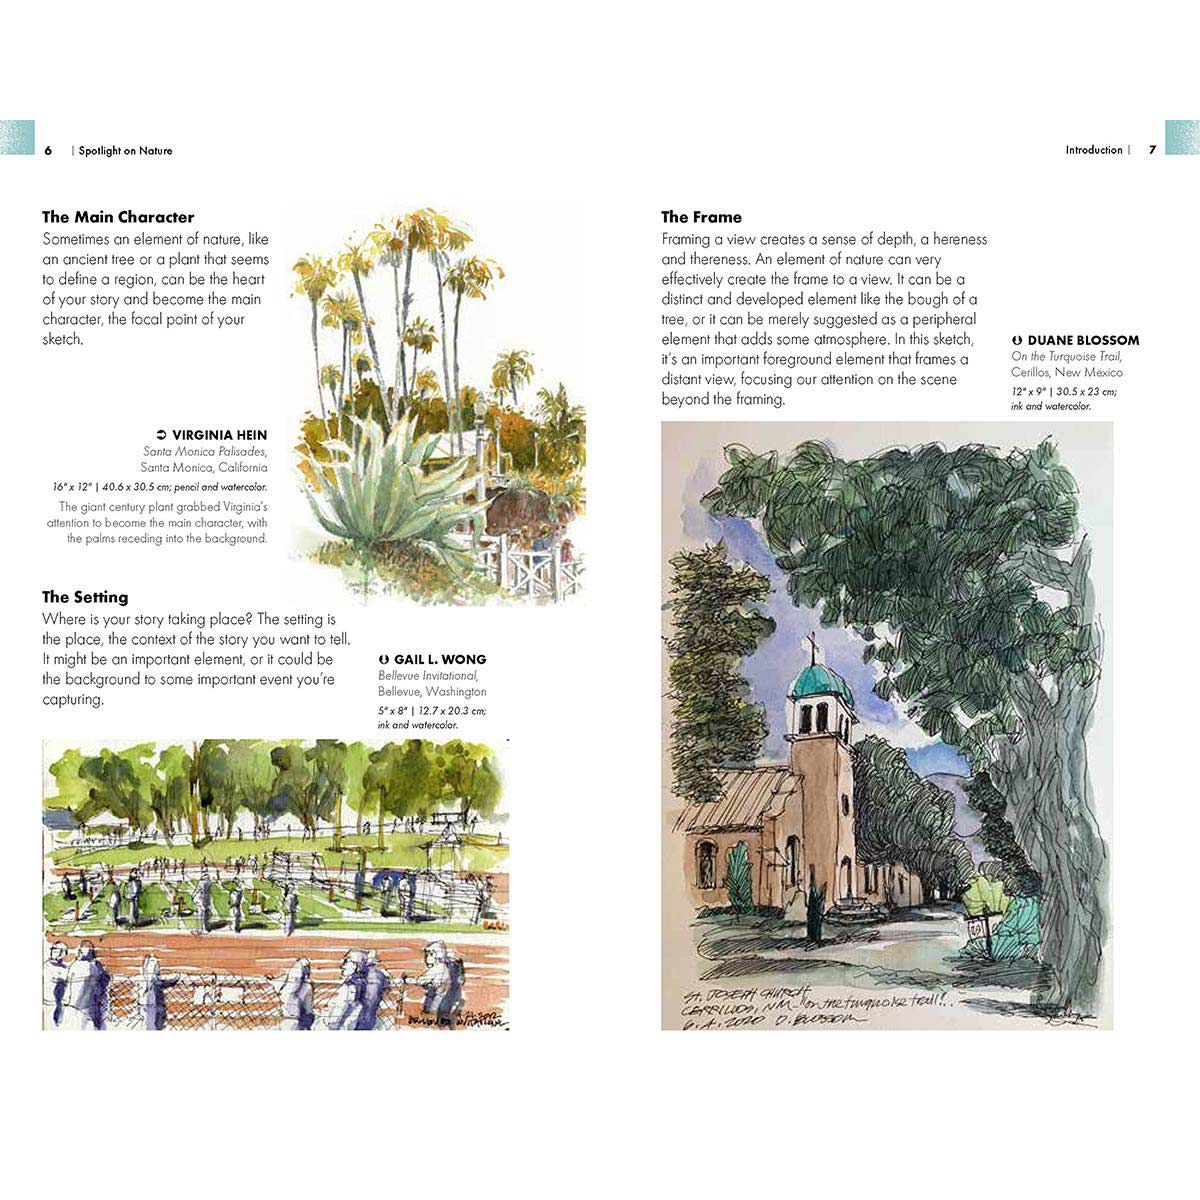 Walter Foster Books - The Urban Sketching Handbook Riflettori sulla natura